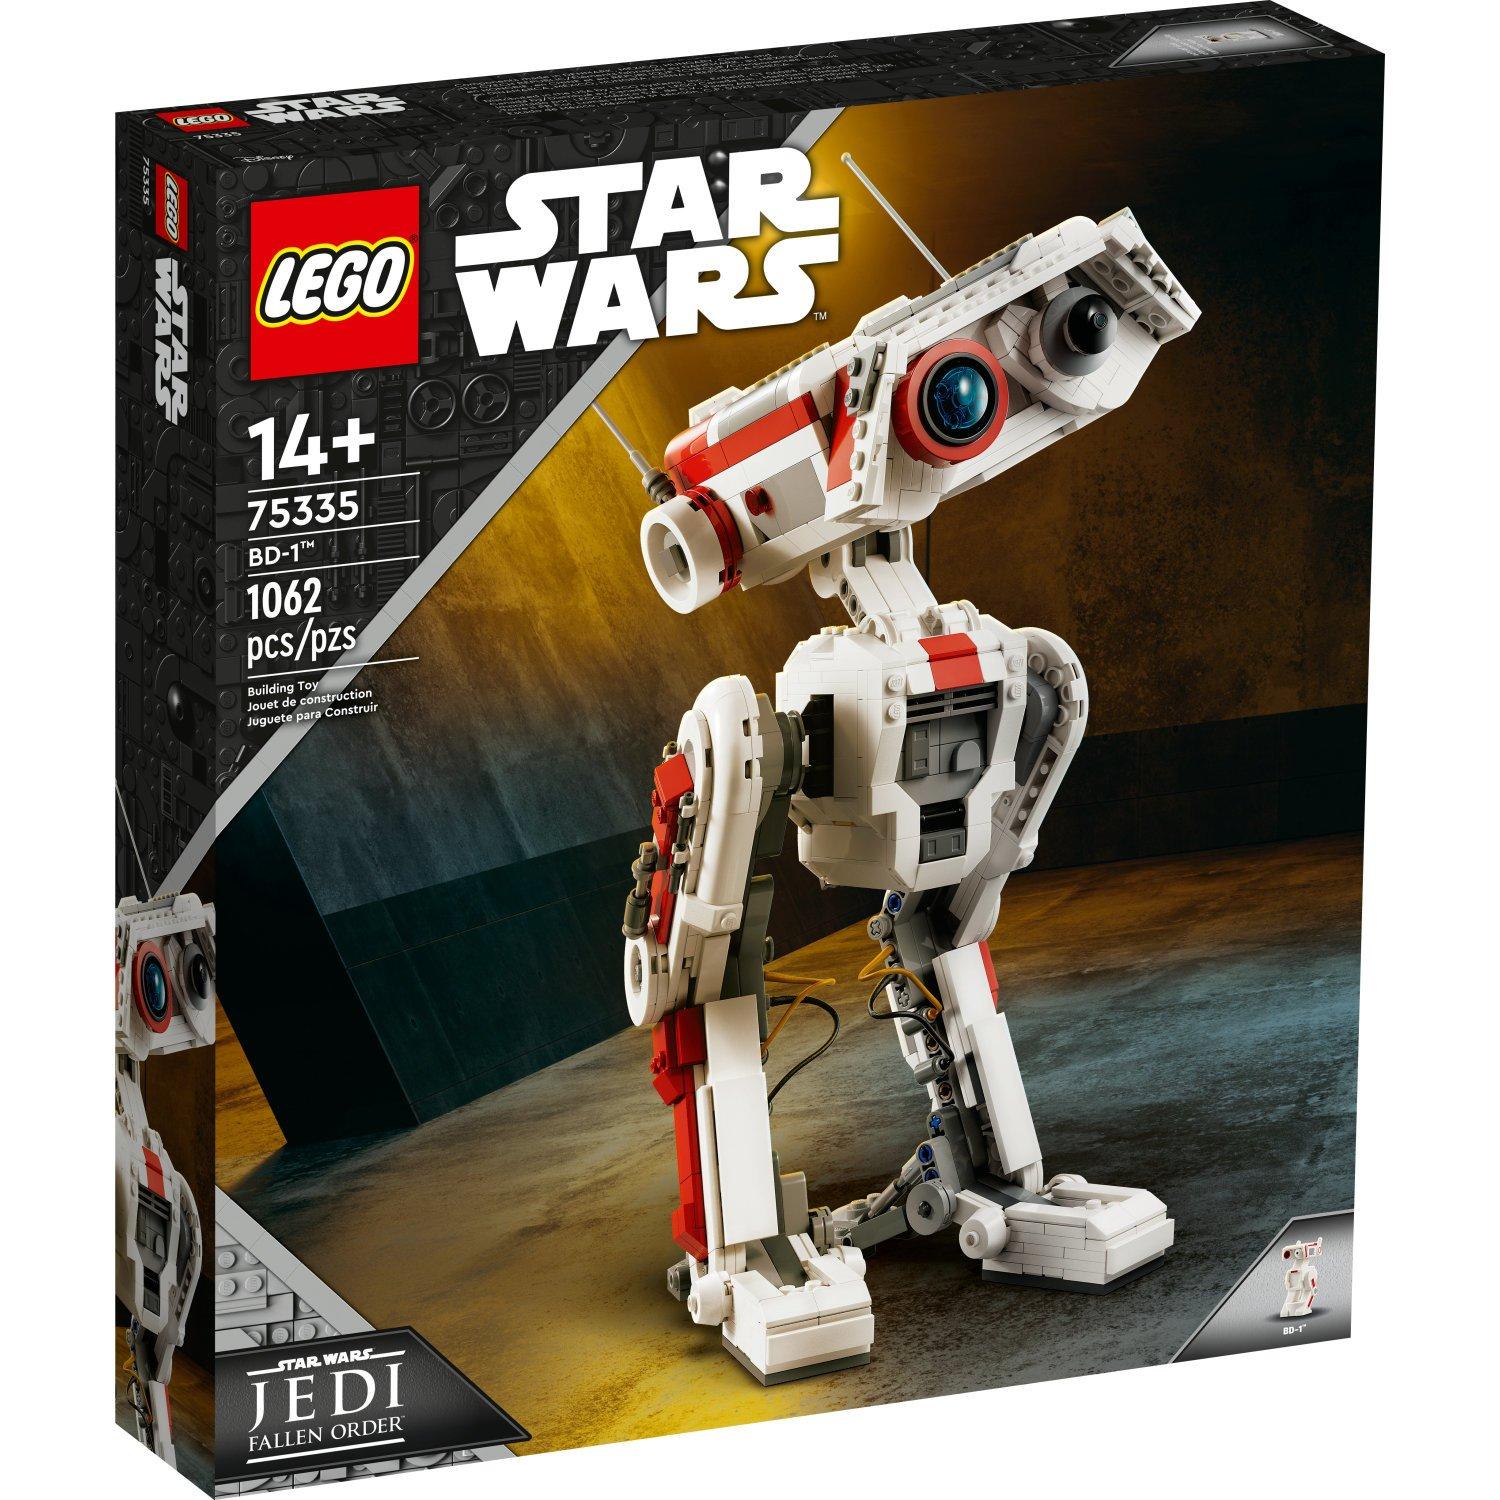 LEGO Star Wars BD-1 75335 Building Kit